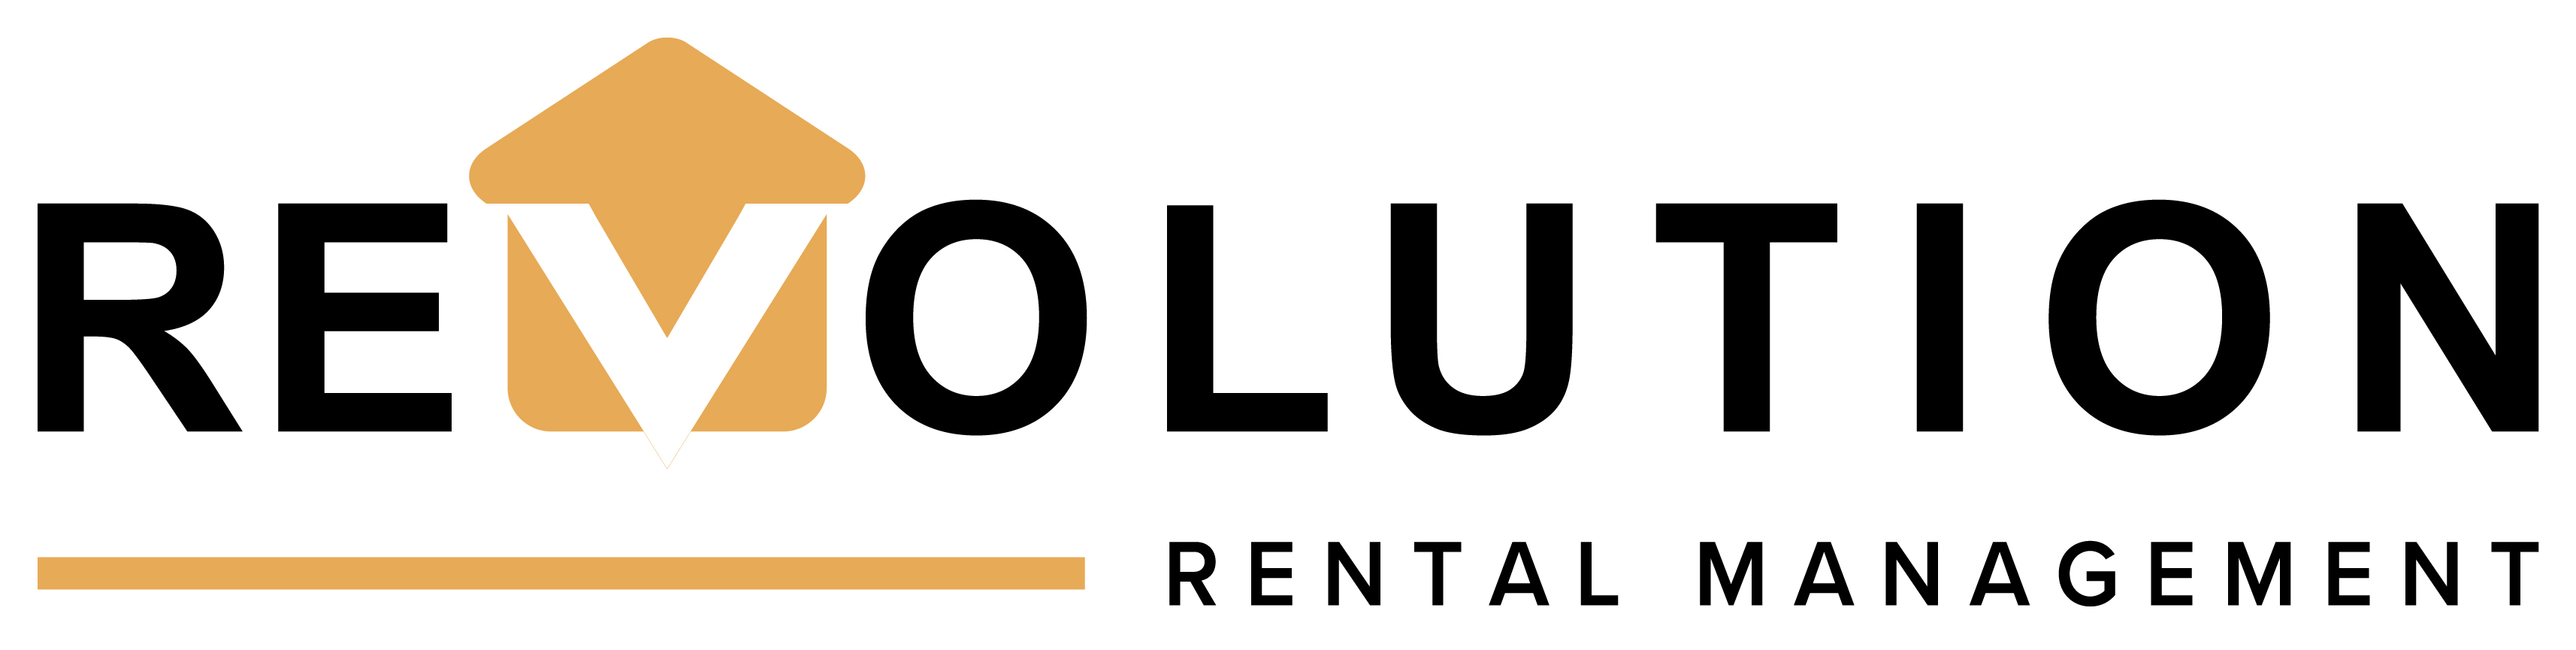 Revolution Rental Management - Main Office logo